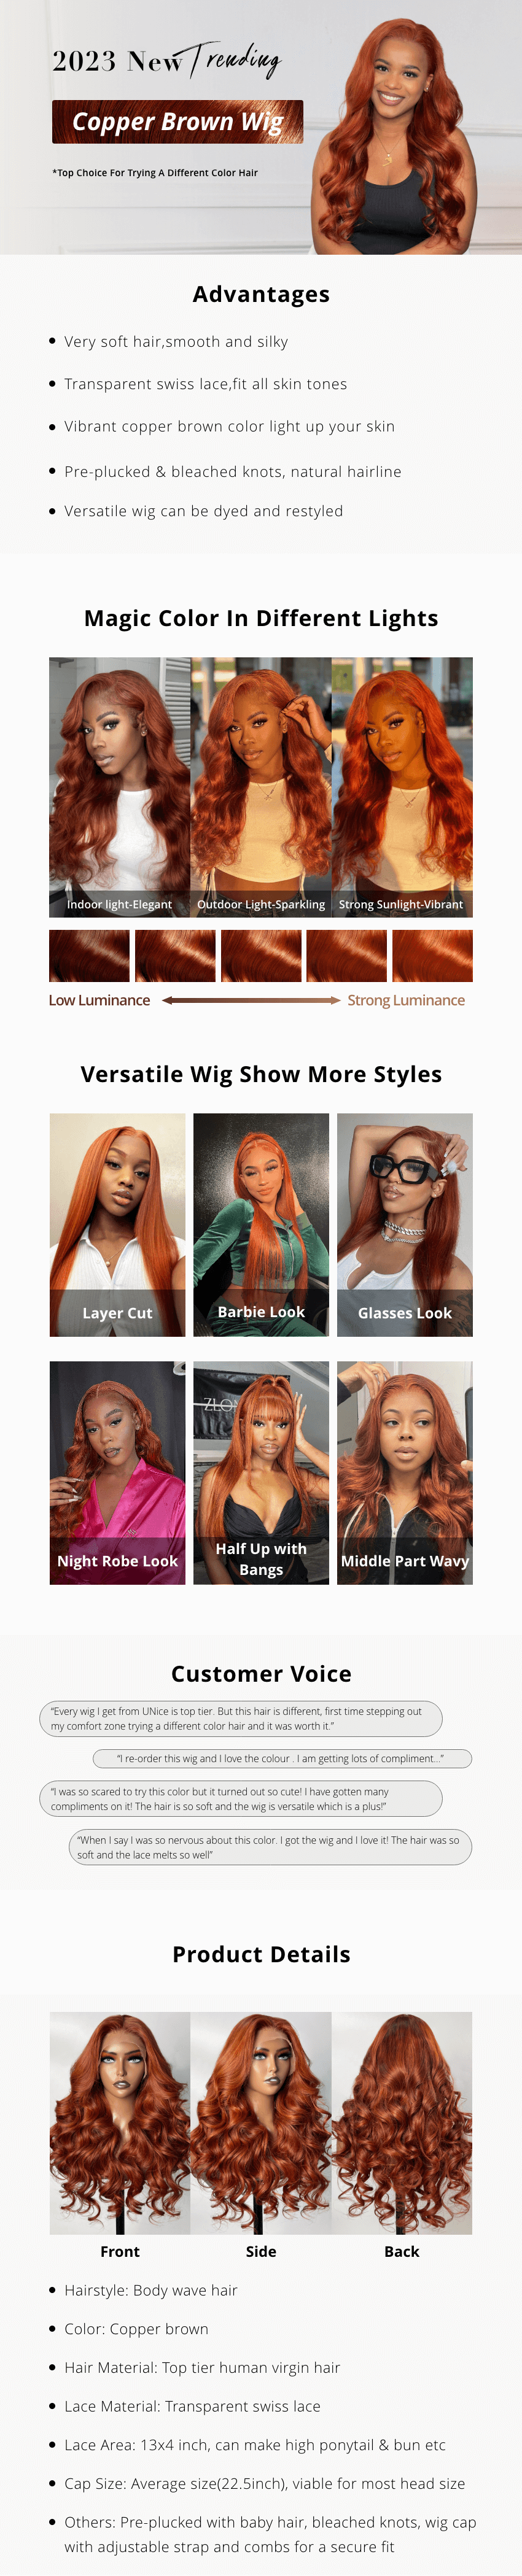 copper brown wigs details